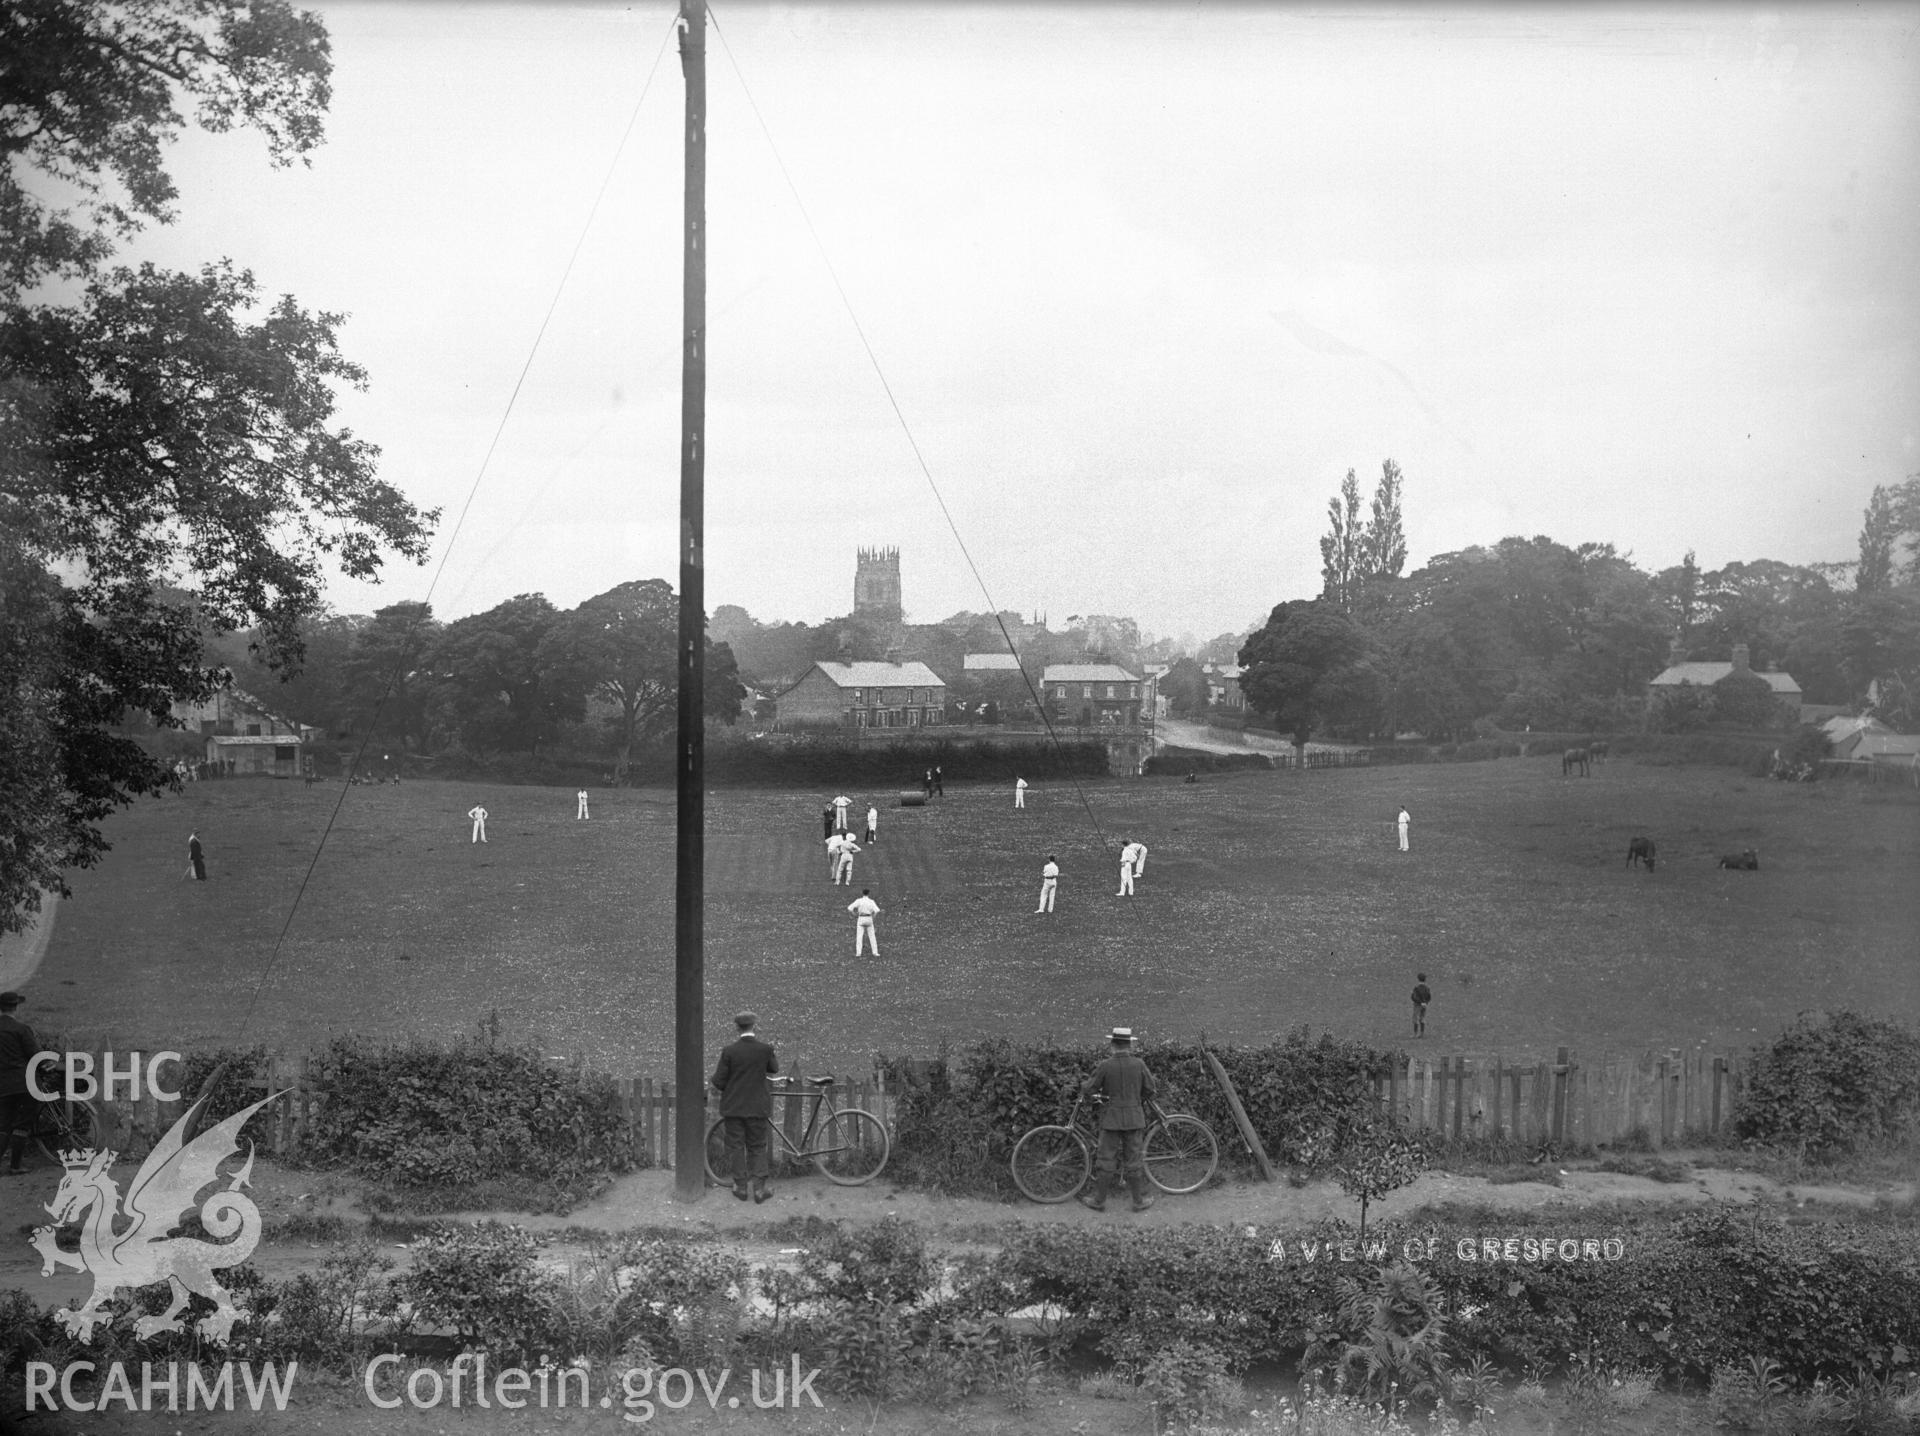 View across cricket ground